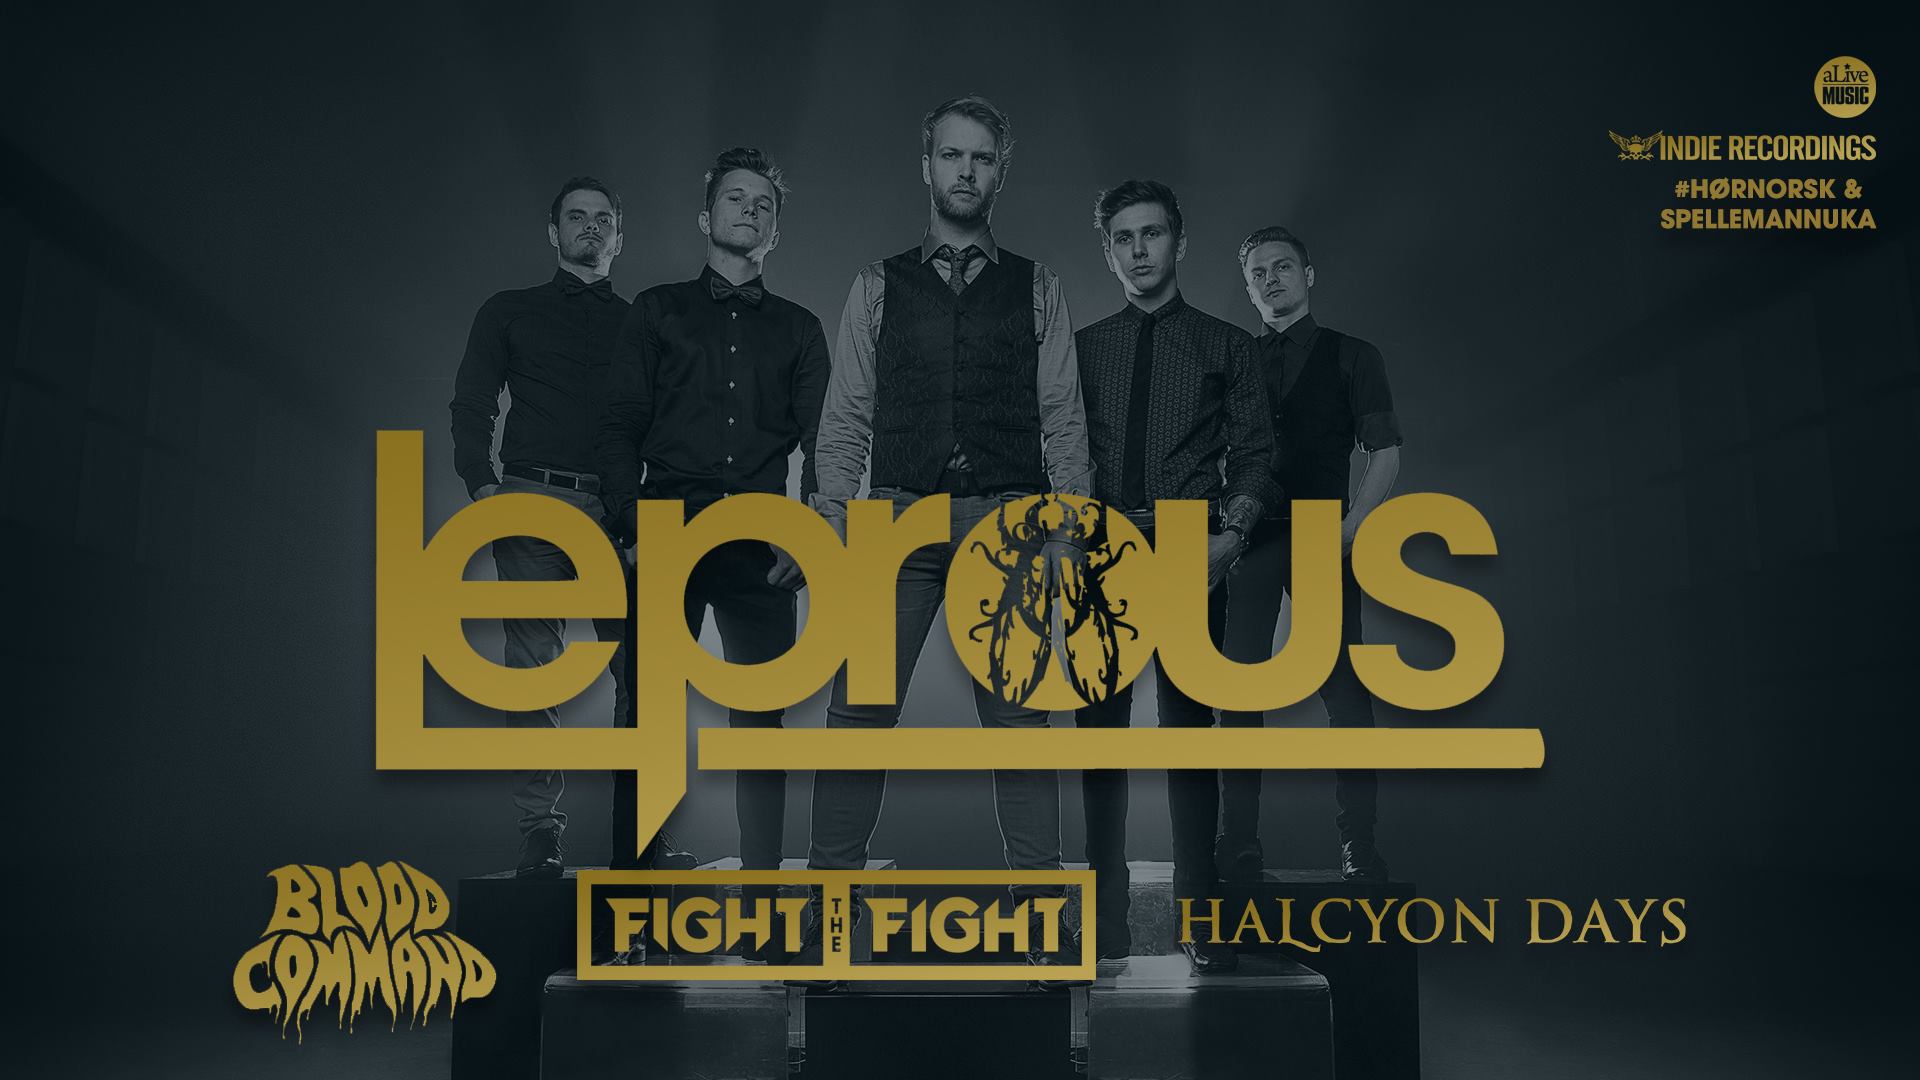 Konsert med Leprous, Blood Command, Fight the Fight og Halcyon Days